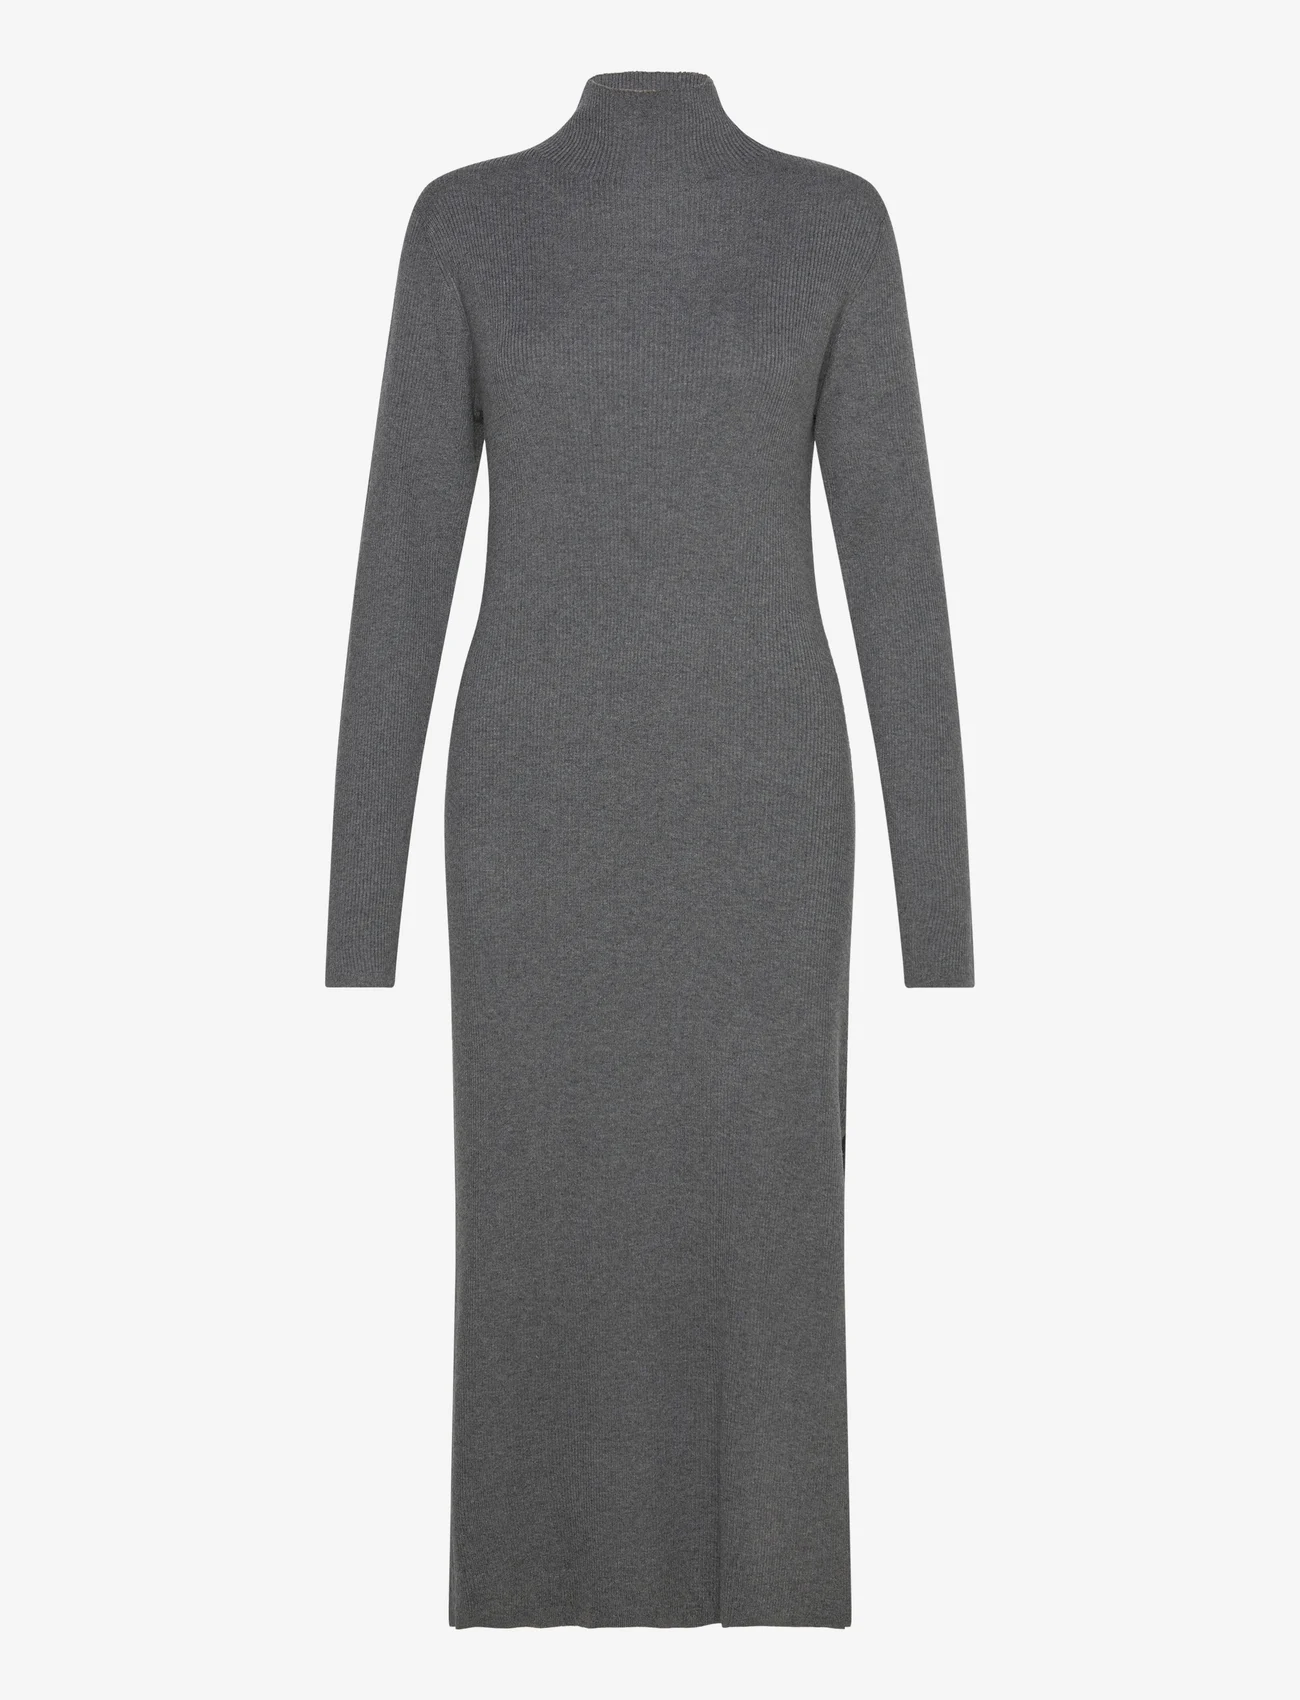 Coster Copenhagen - CC Heart GLORIA knit dress - aptemtos suknelės - dark grey melange - 0